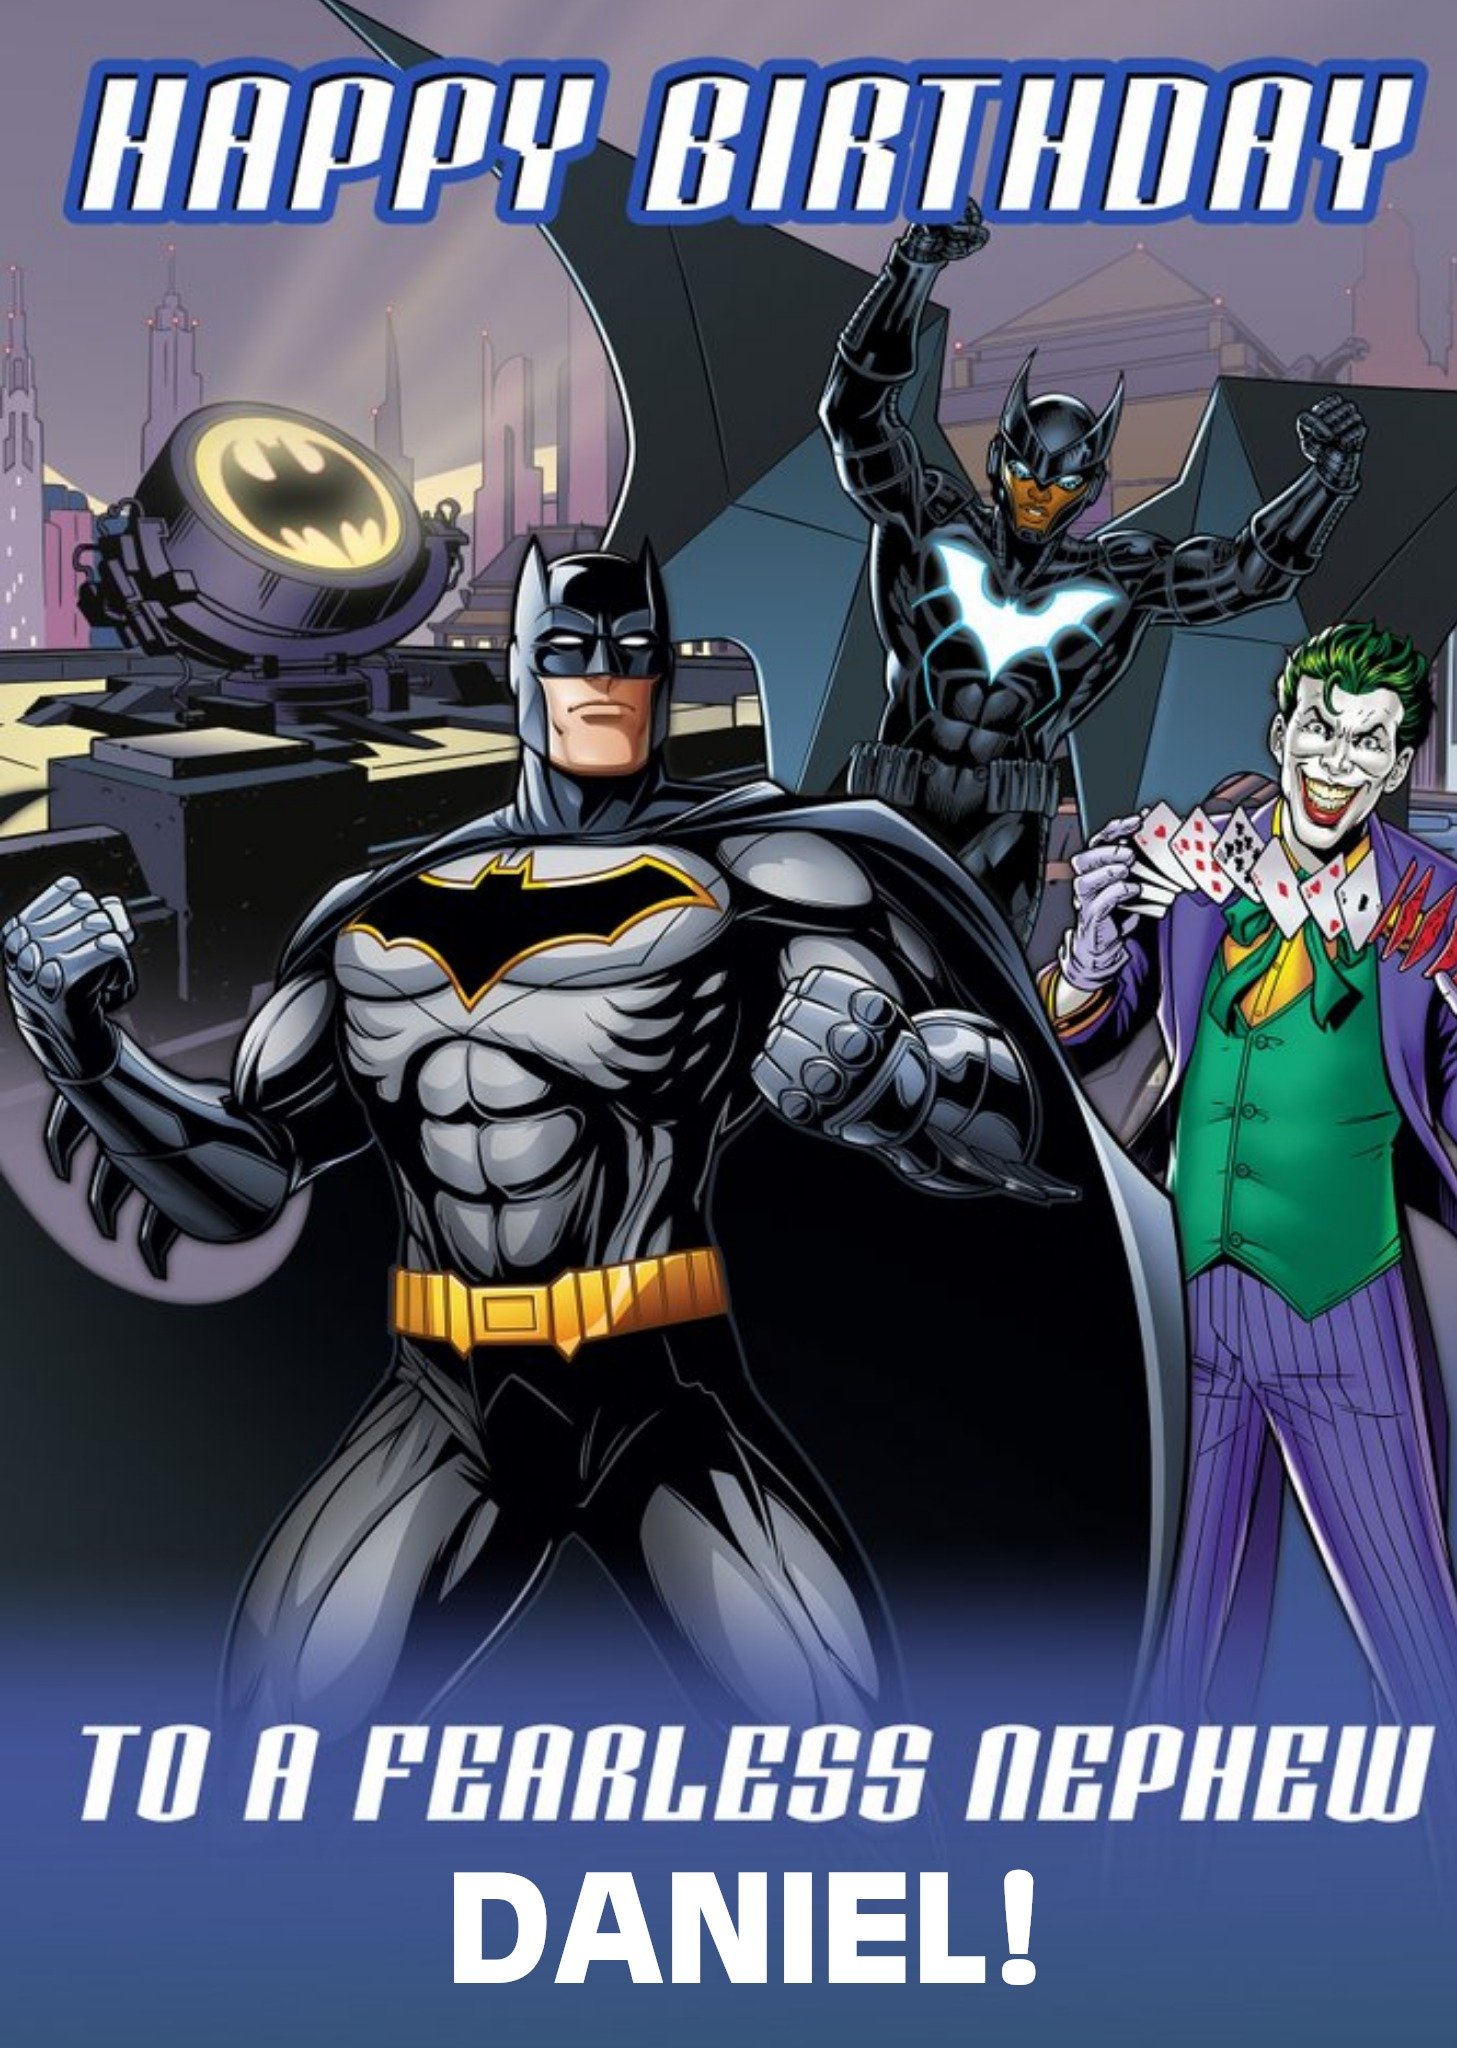 Illustrated Fearless Nephew Batman Birthday Card Ecard